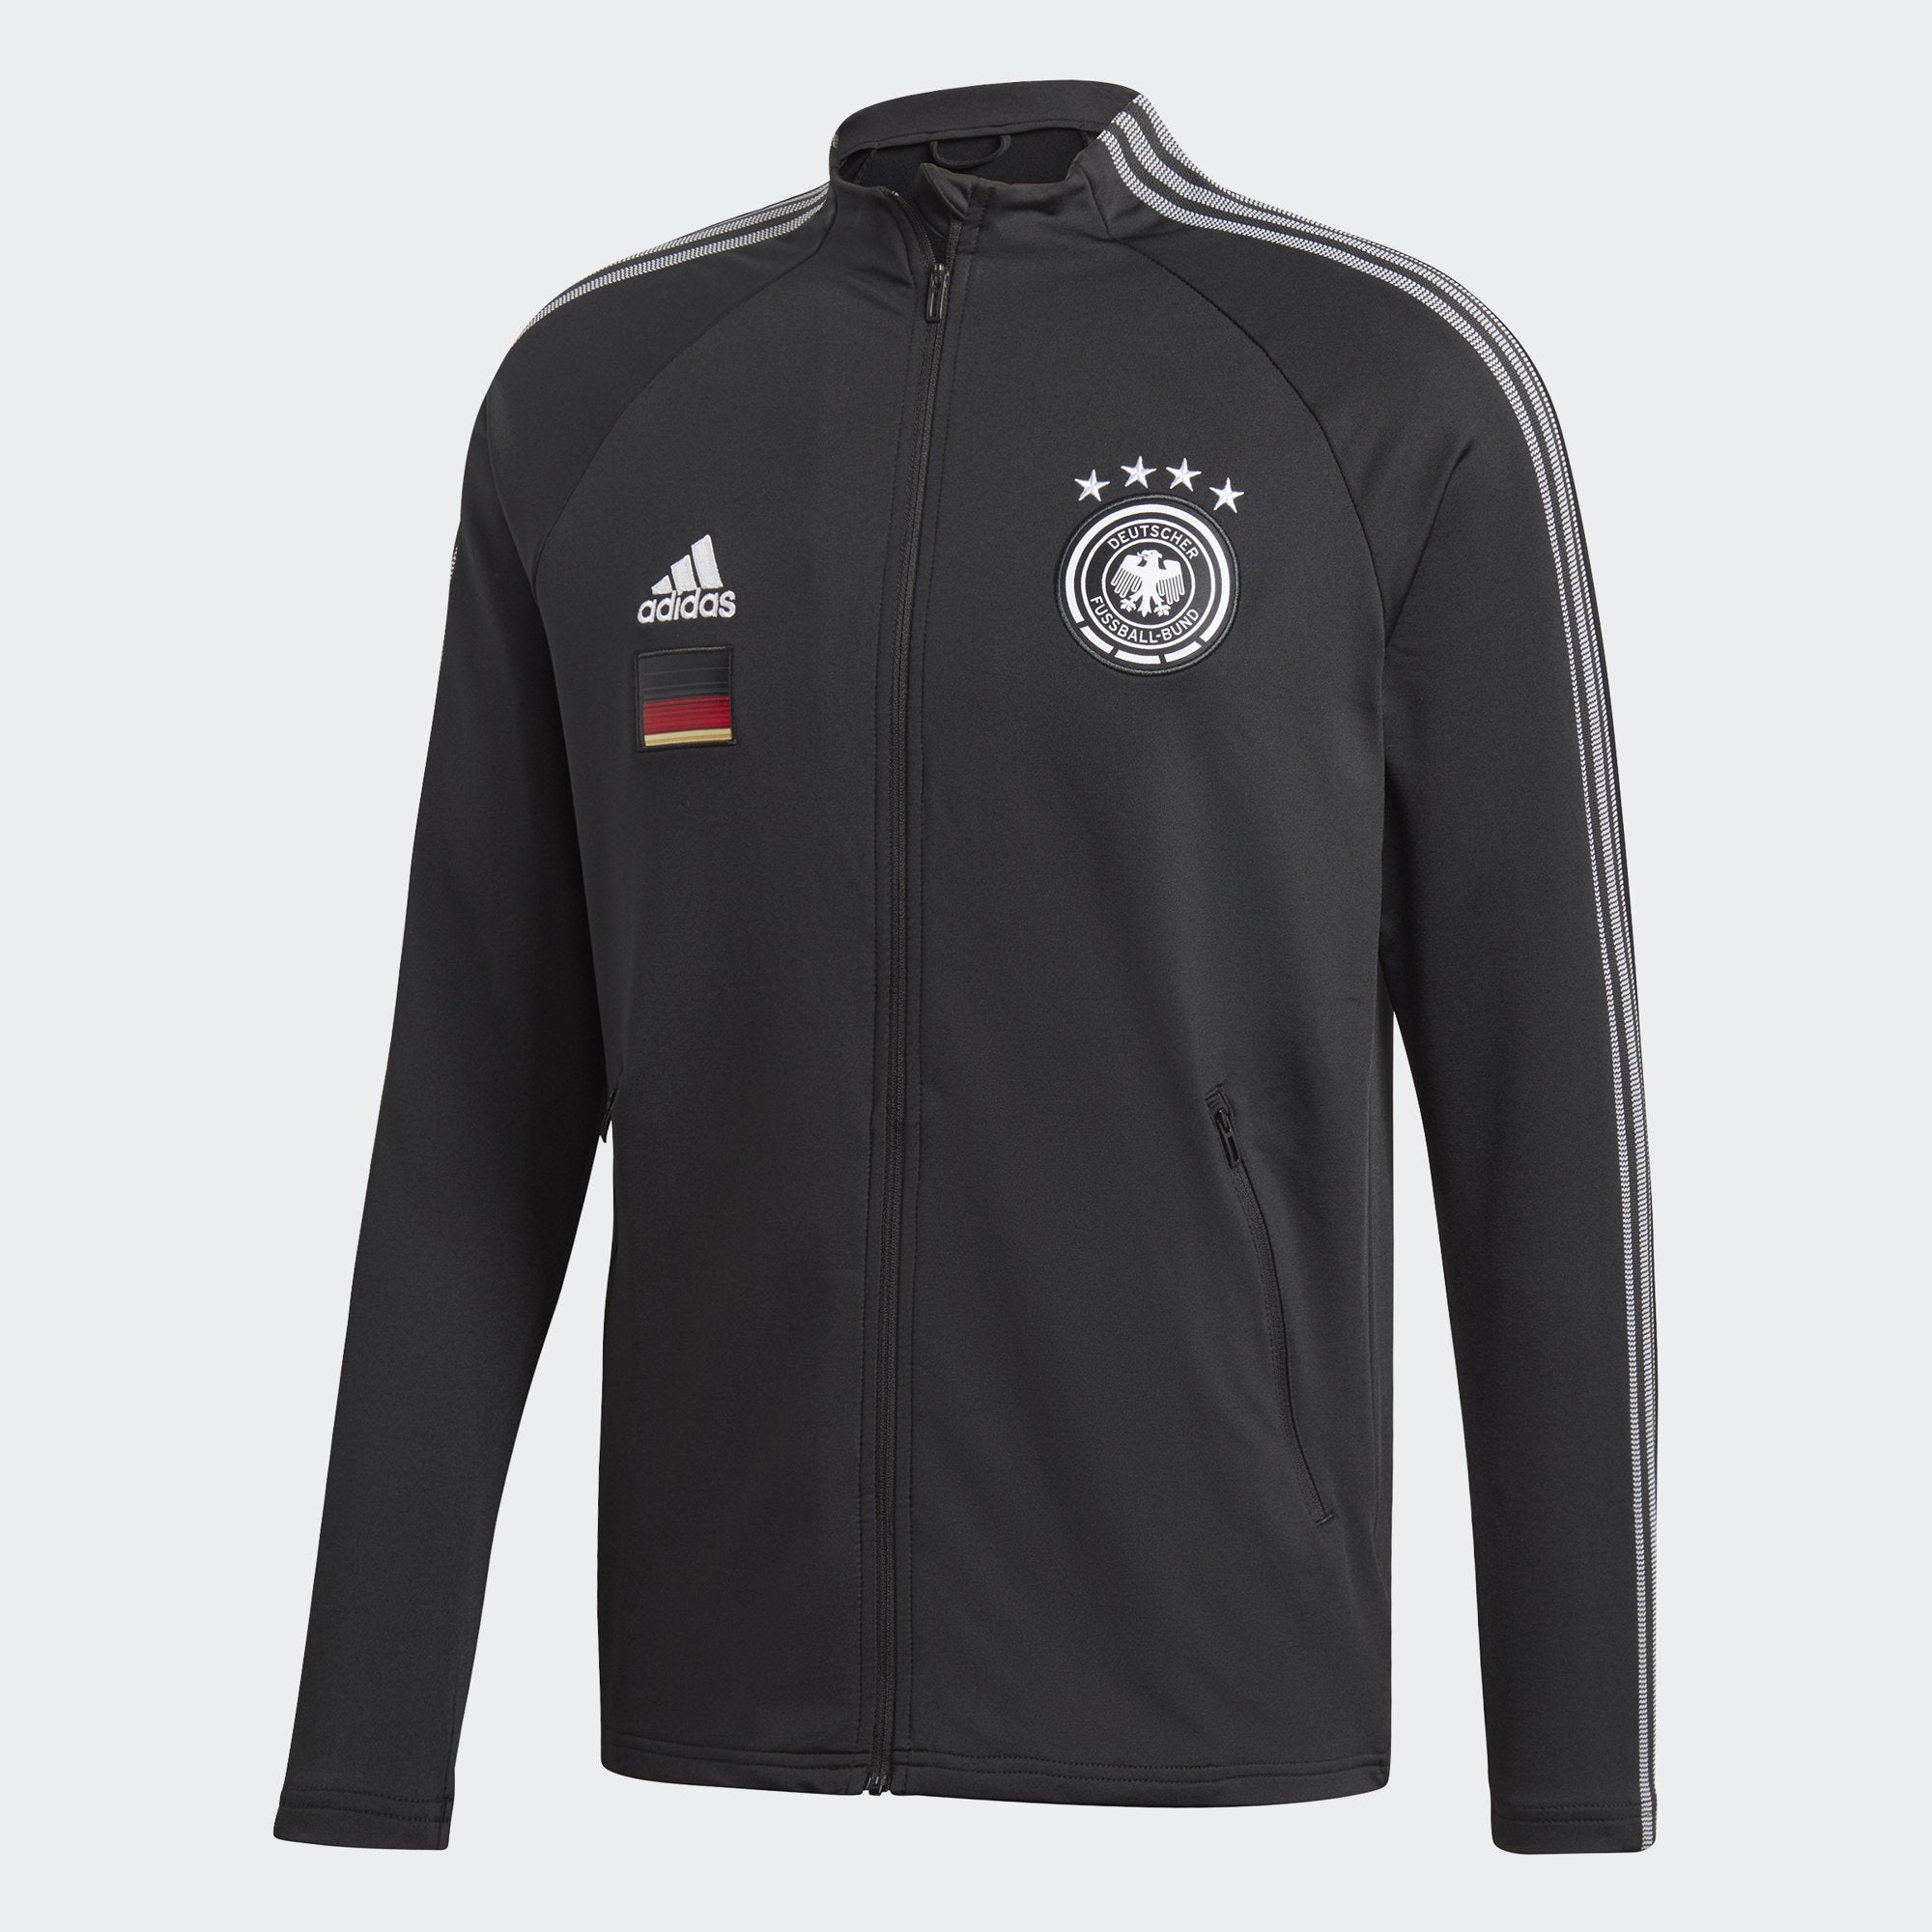 Адидас сборная германии. Adidas Germany Anthem Jacket. Олимпийка адидас 2020. Adidas DFB "Германия". Adidas Deutschland олимпийка.